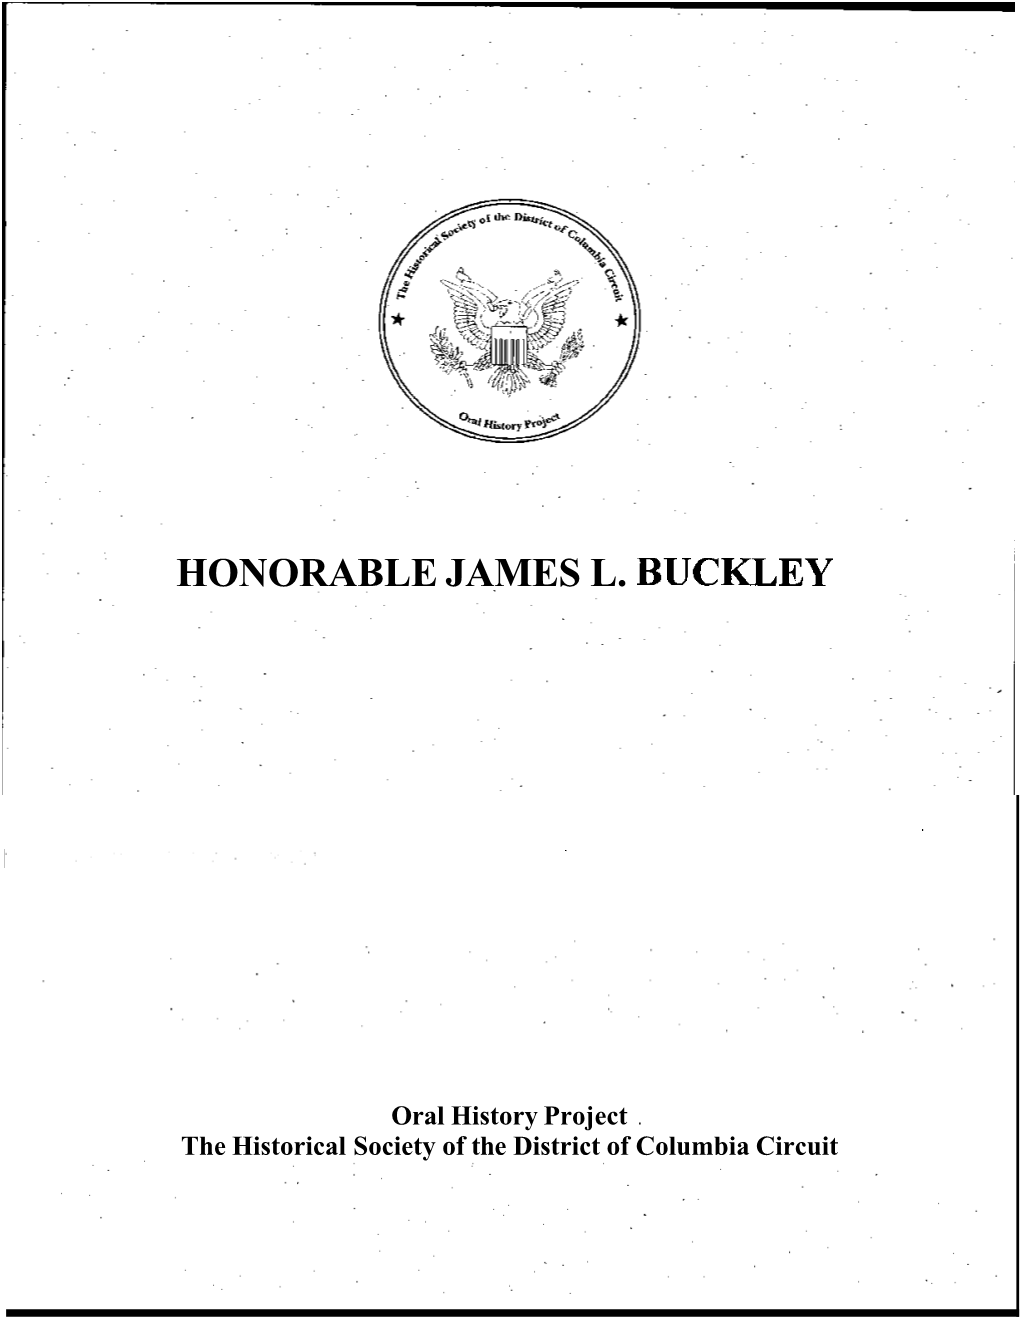 Honorable James L. Buckley